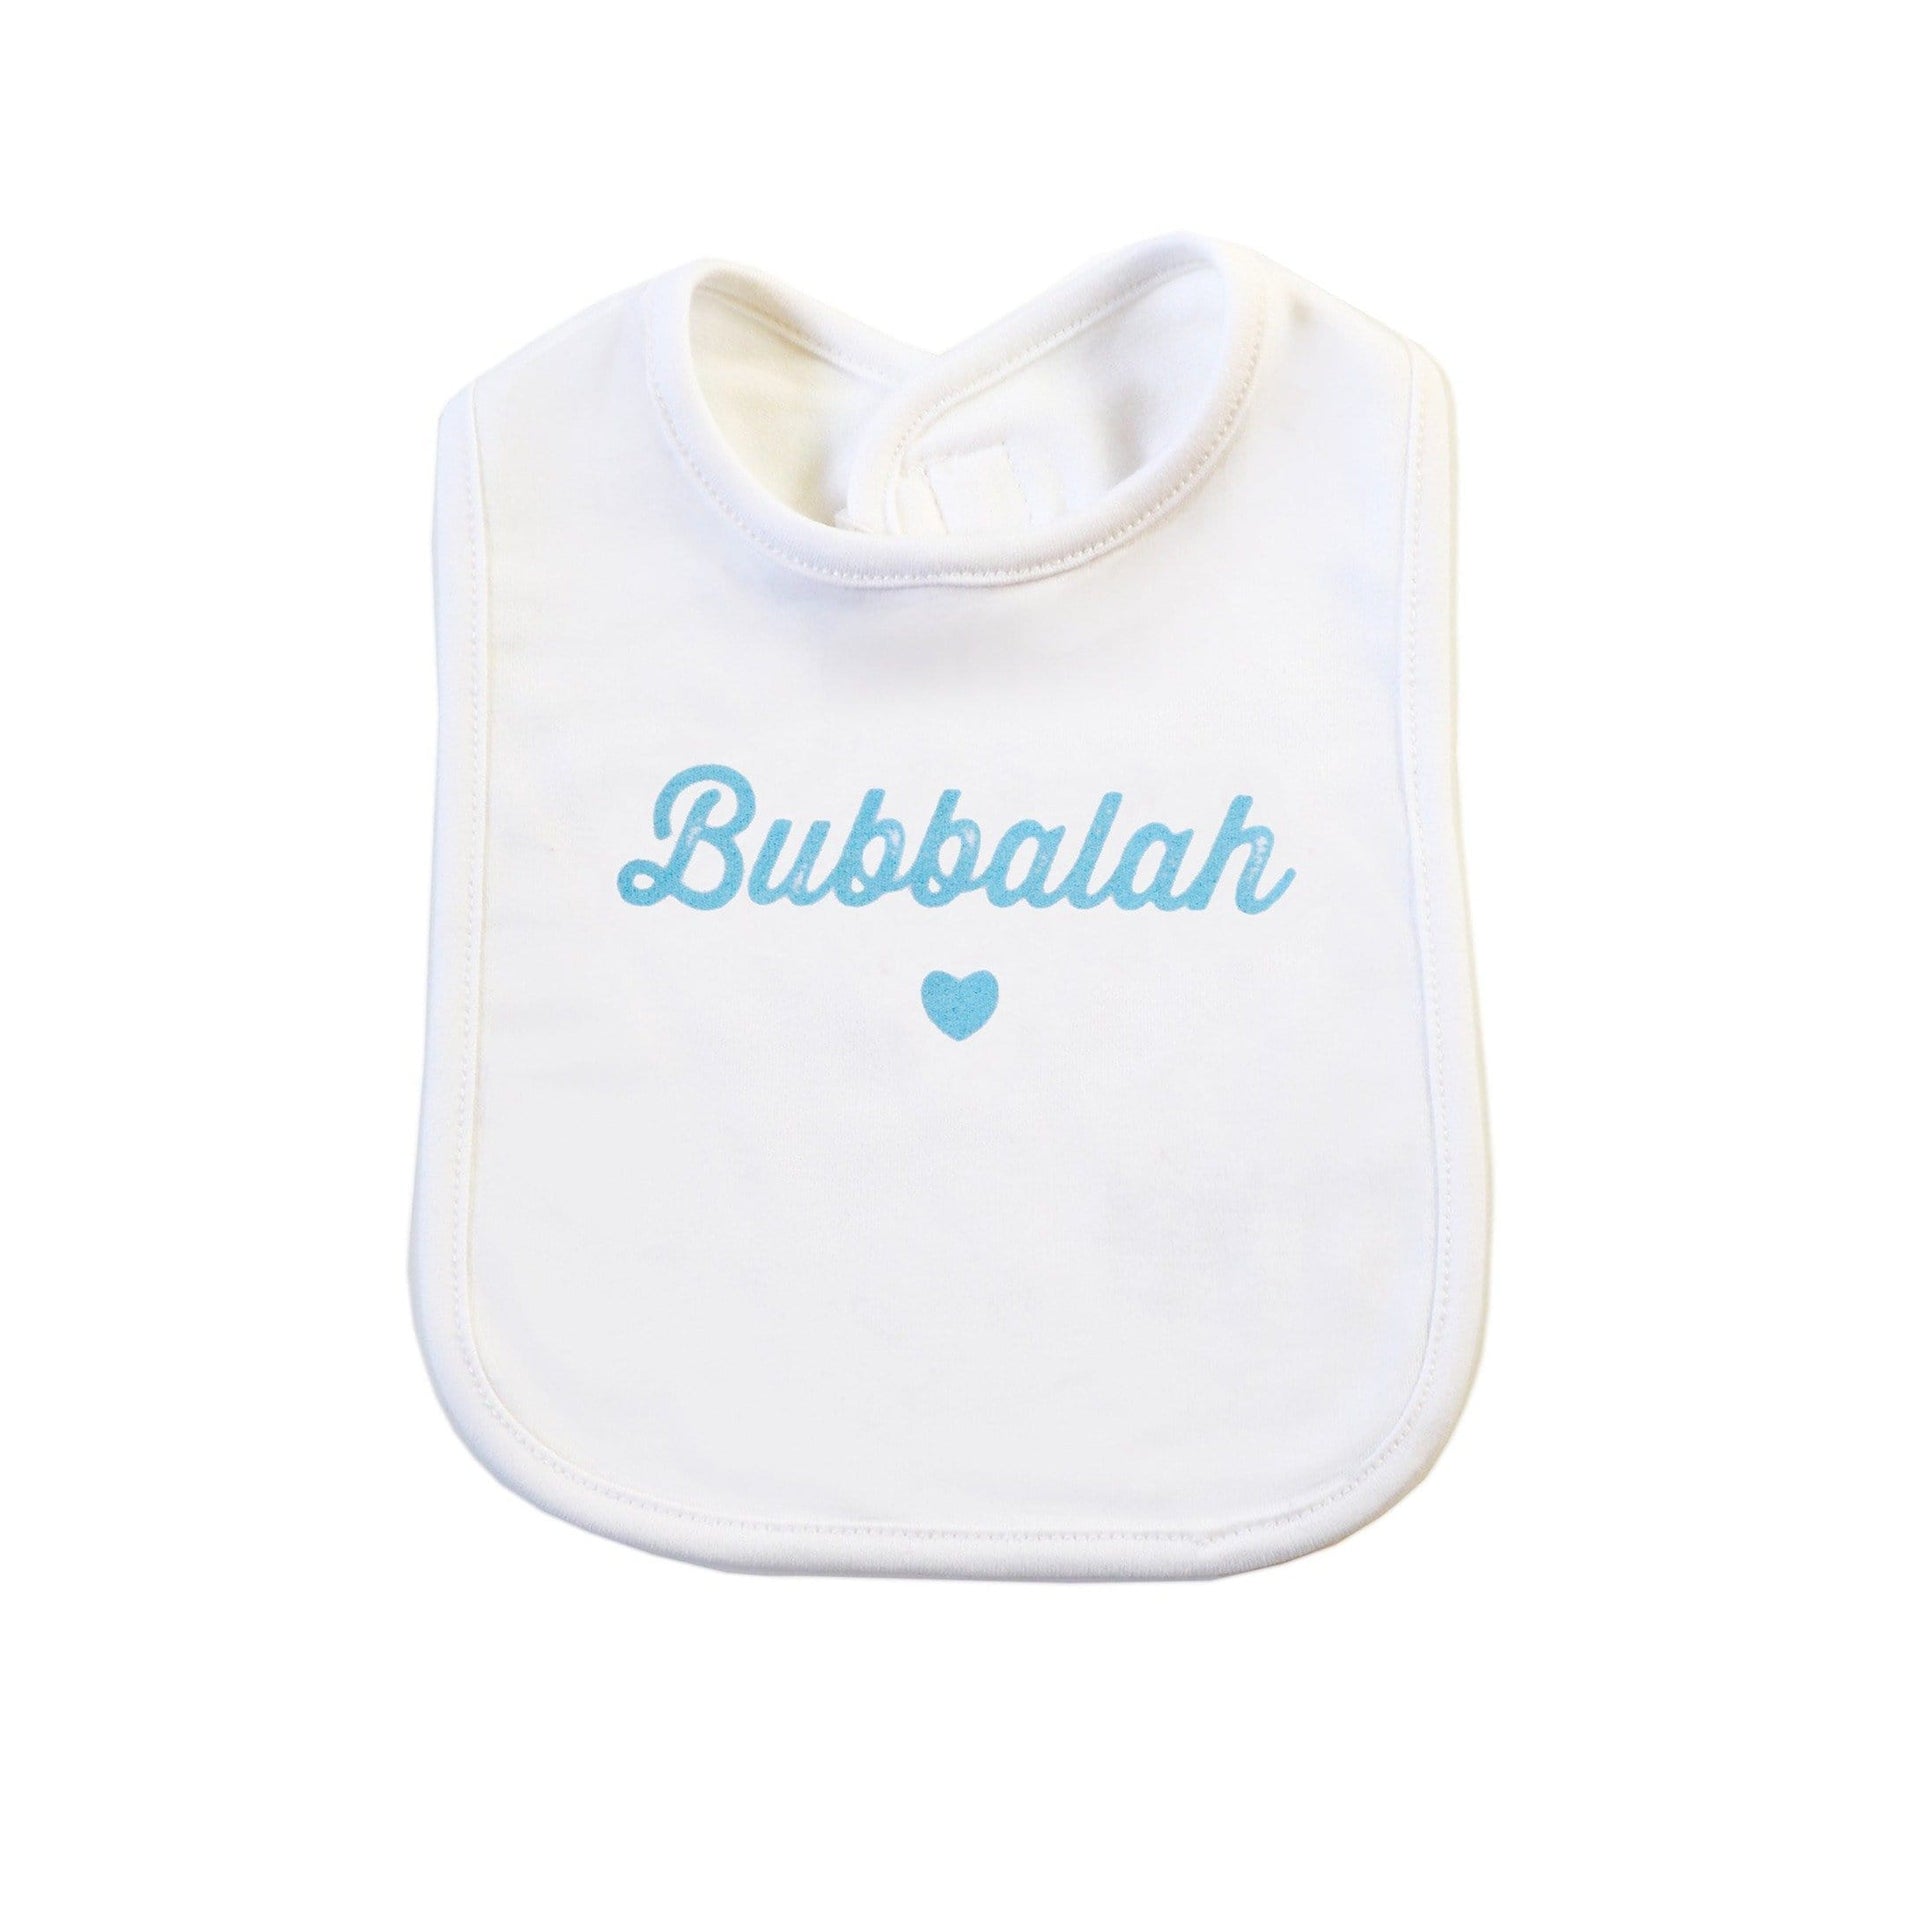 Oy Vey Baby Bibs Blue Bubbalah White and Blue Baby Bib